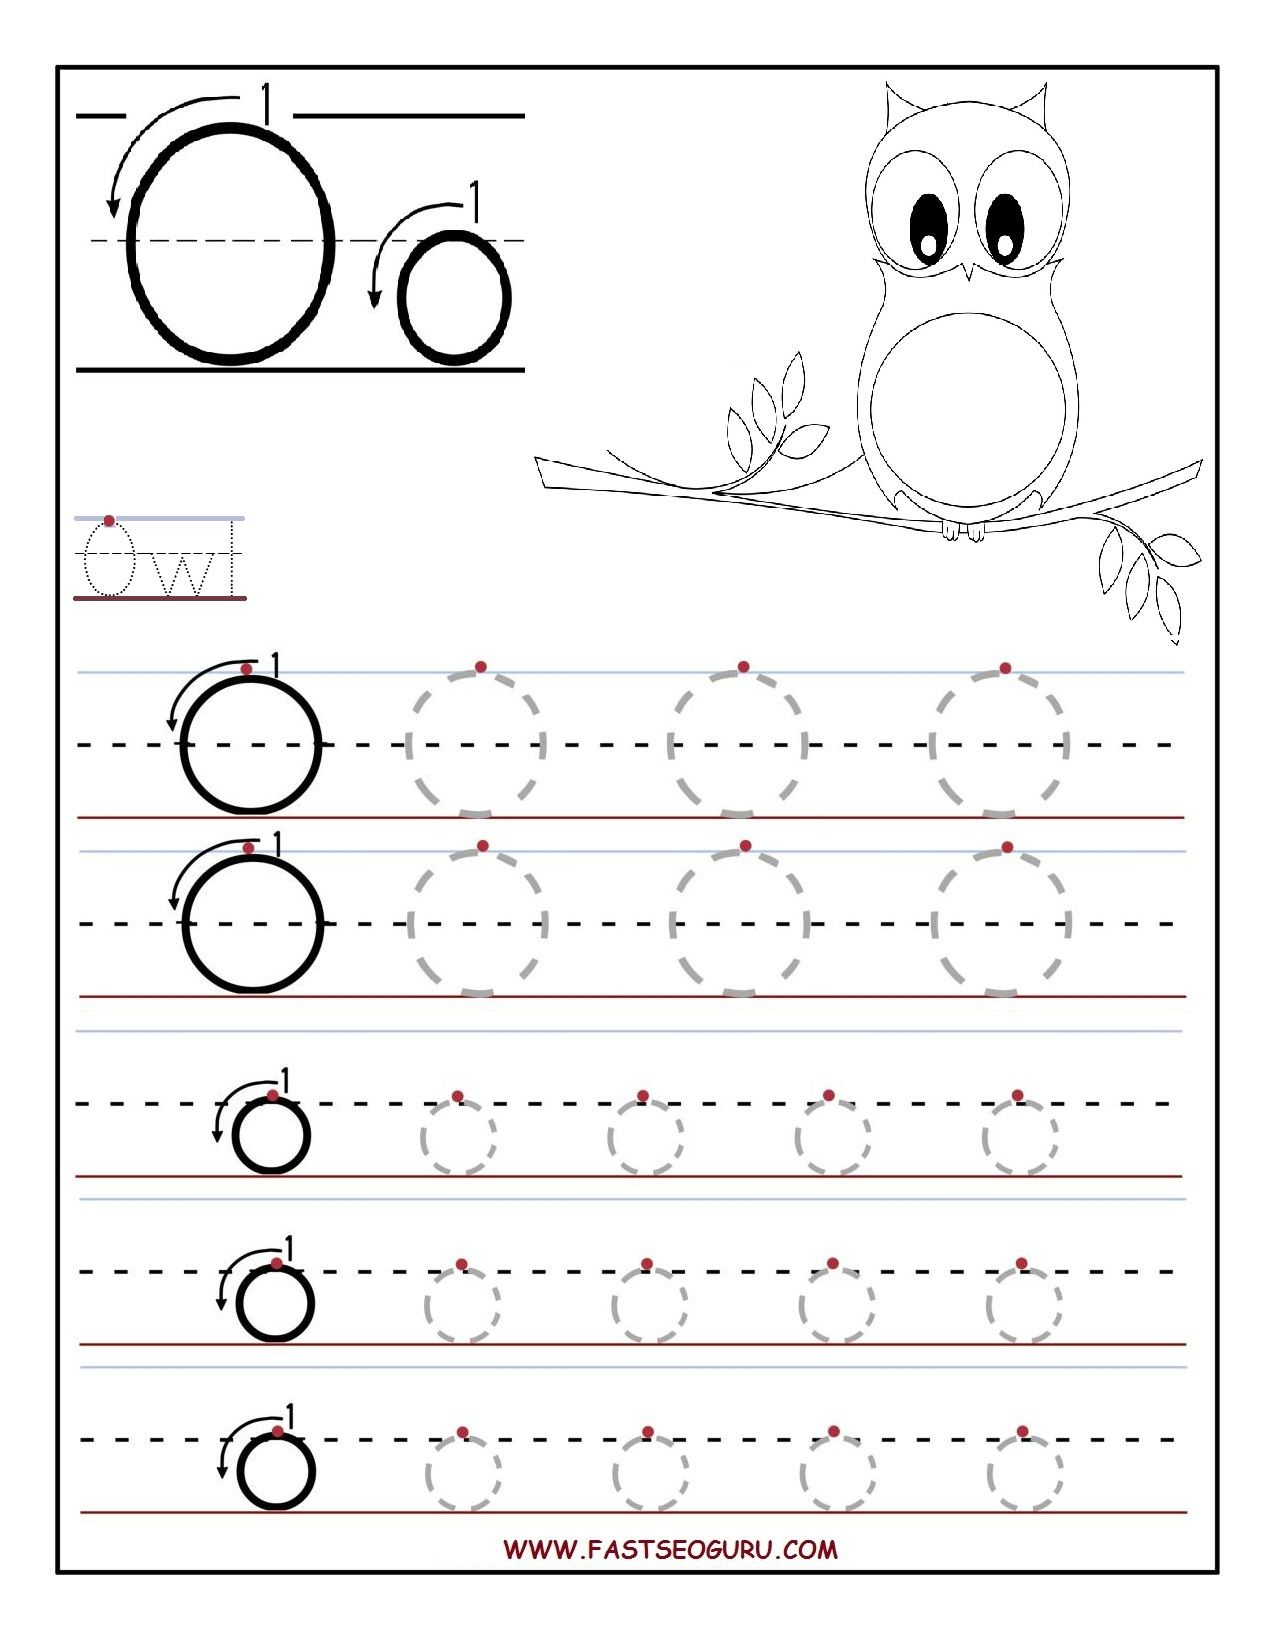 Letter O Worksheets For Preschool with Letter O Worksheets For Preschool